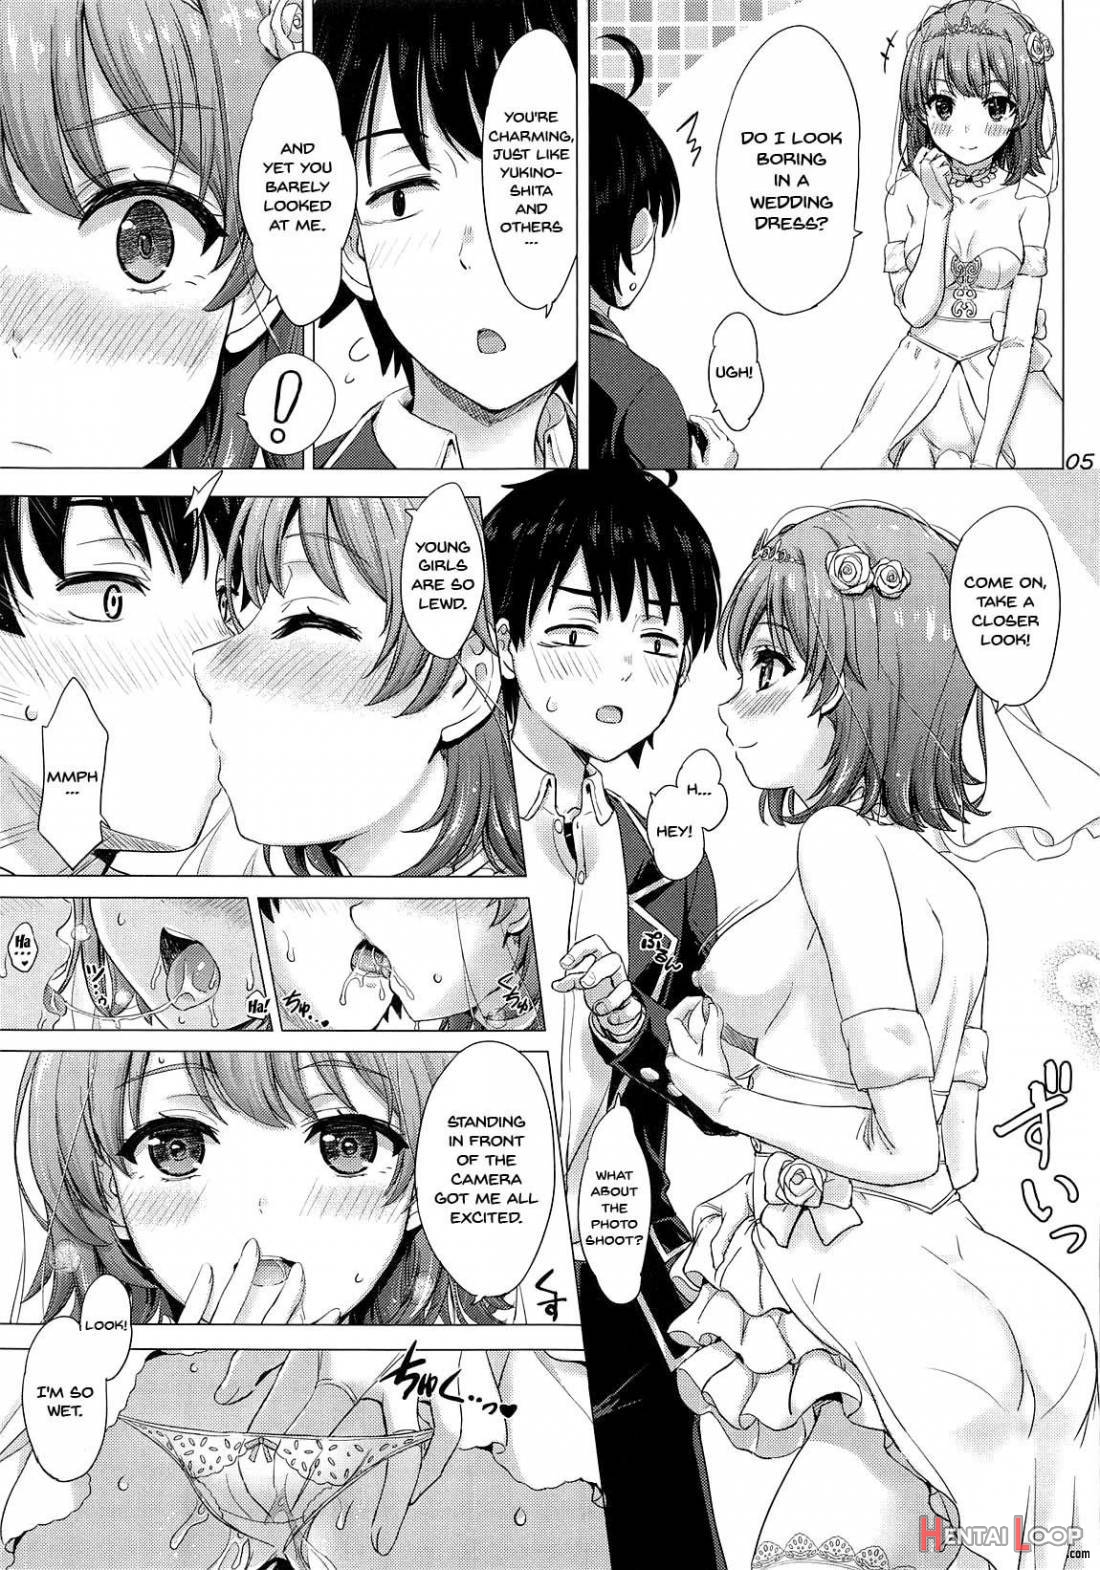 Wedding Irohasu! – Iroha’s Gonna Marry You After Today’s Scholl! page 4